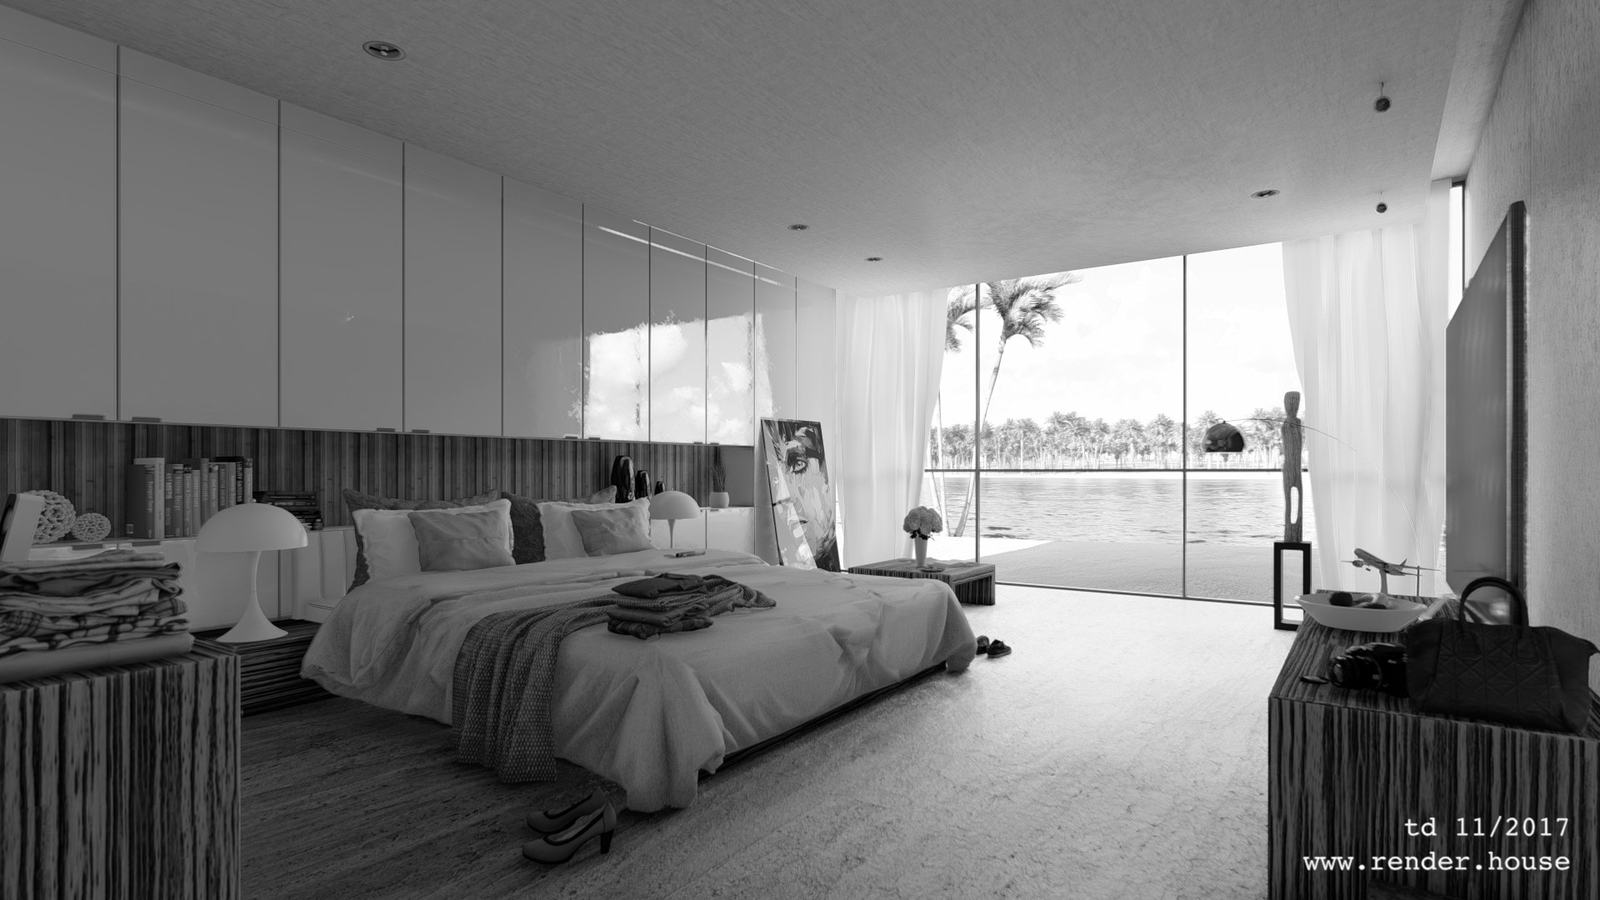 2017.11.13 Greyscale interior bedroom small.jpg